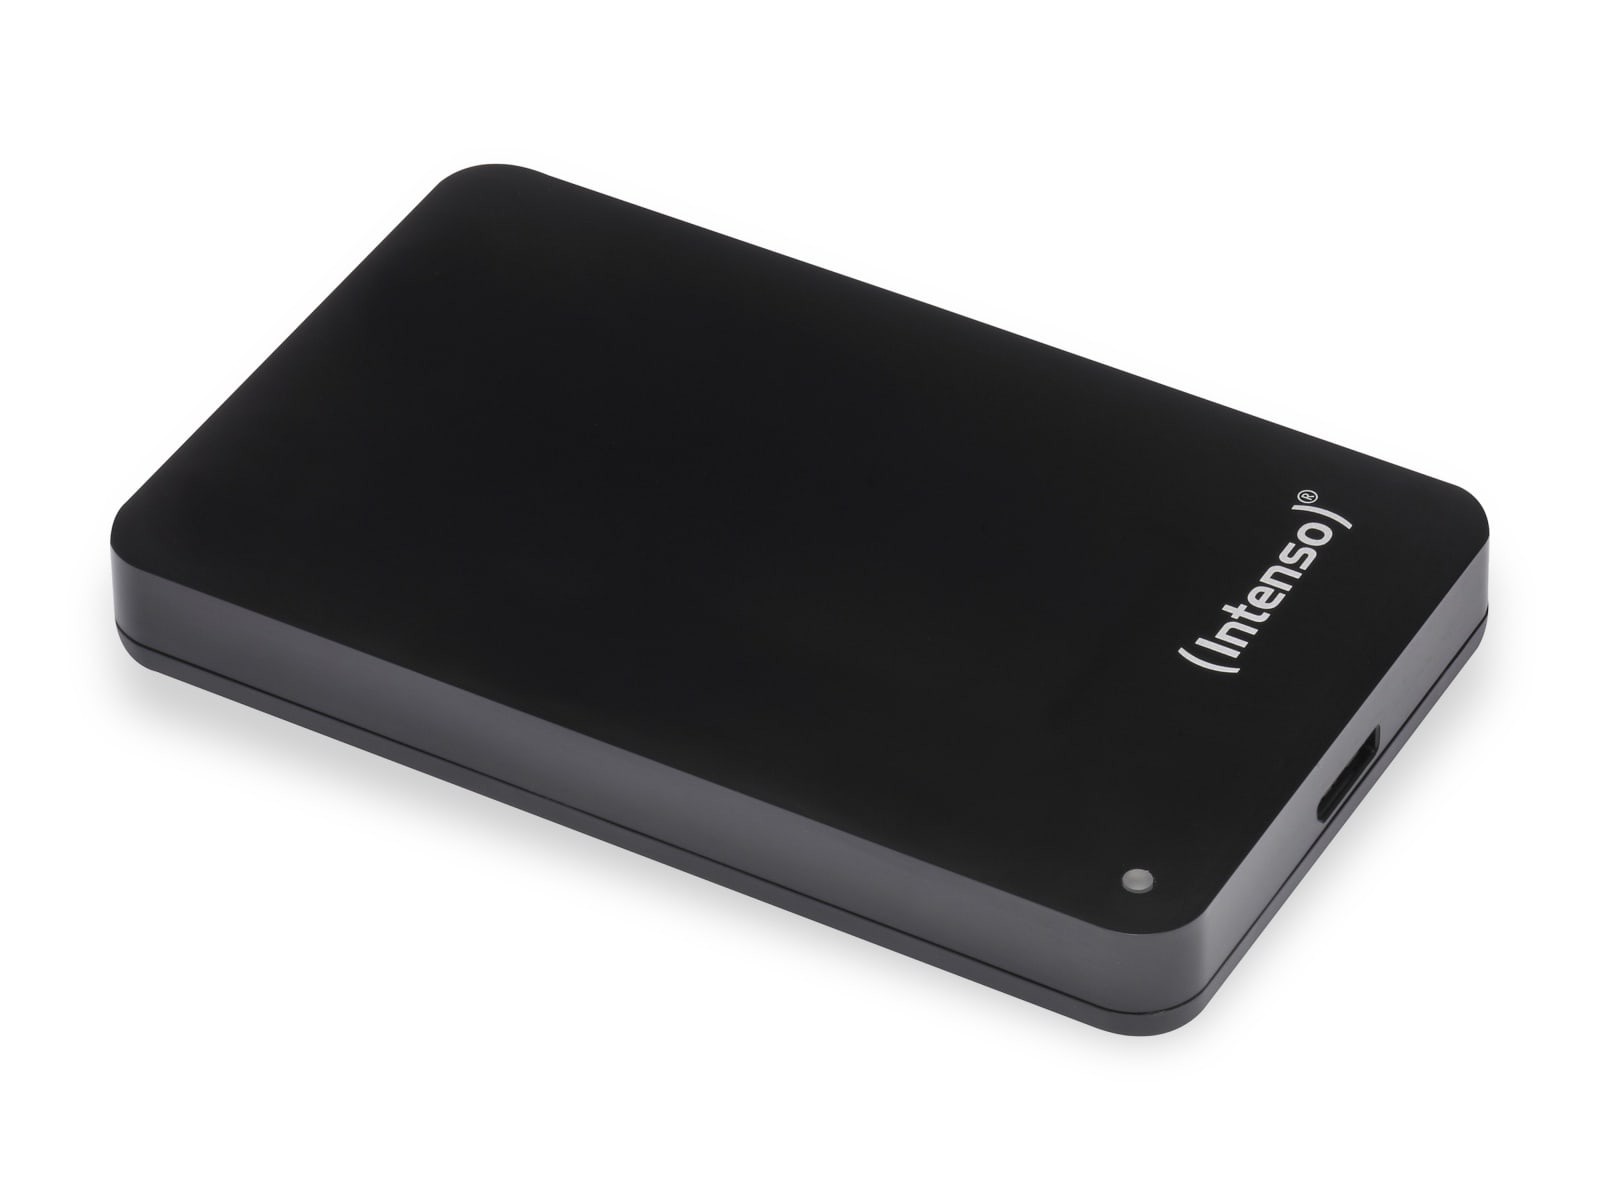 INTENSO USB 3.0-HDD Memory Case, 5 TB, 6,35 cm (2,5"), schwarz